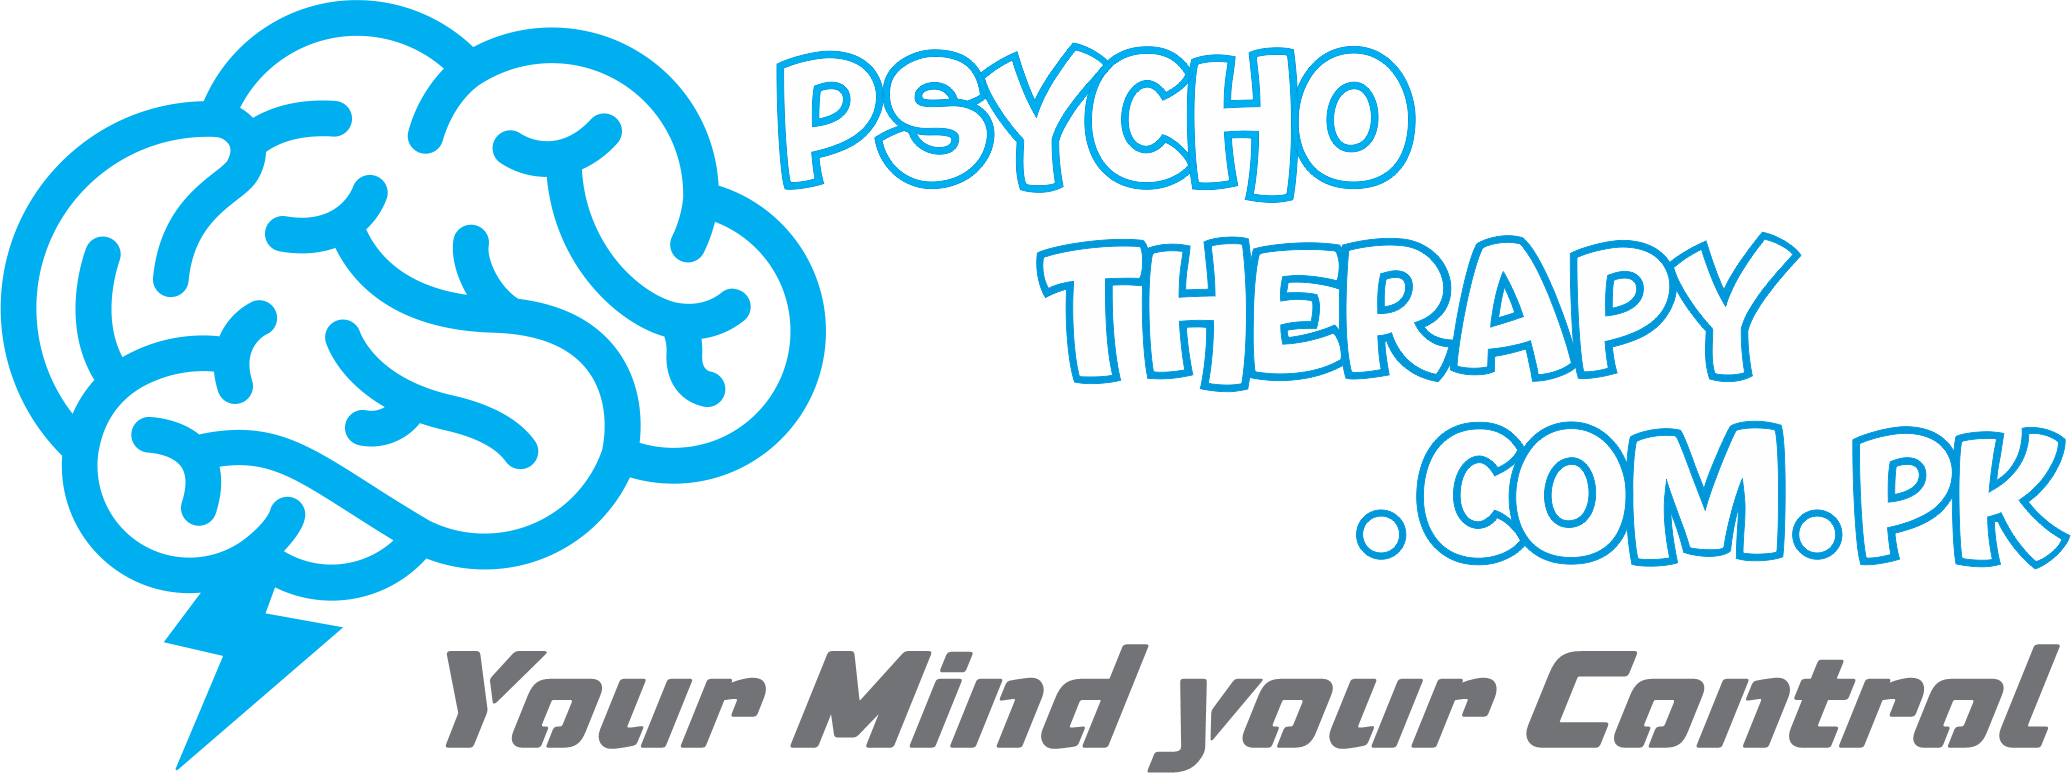 Psychotherapy.com.pk